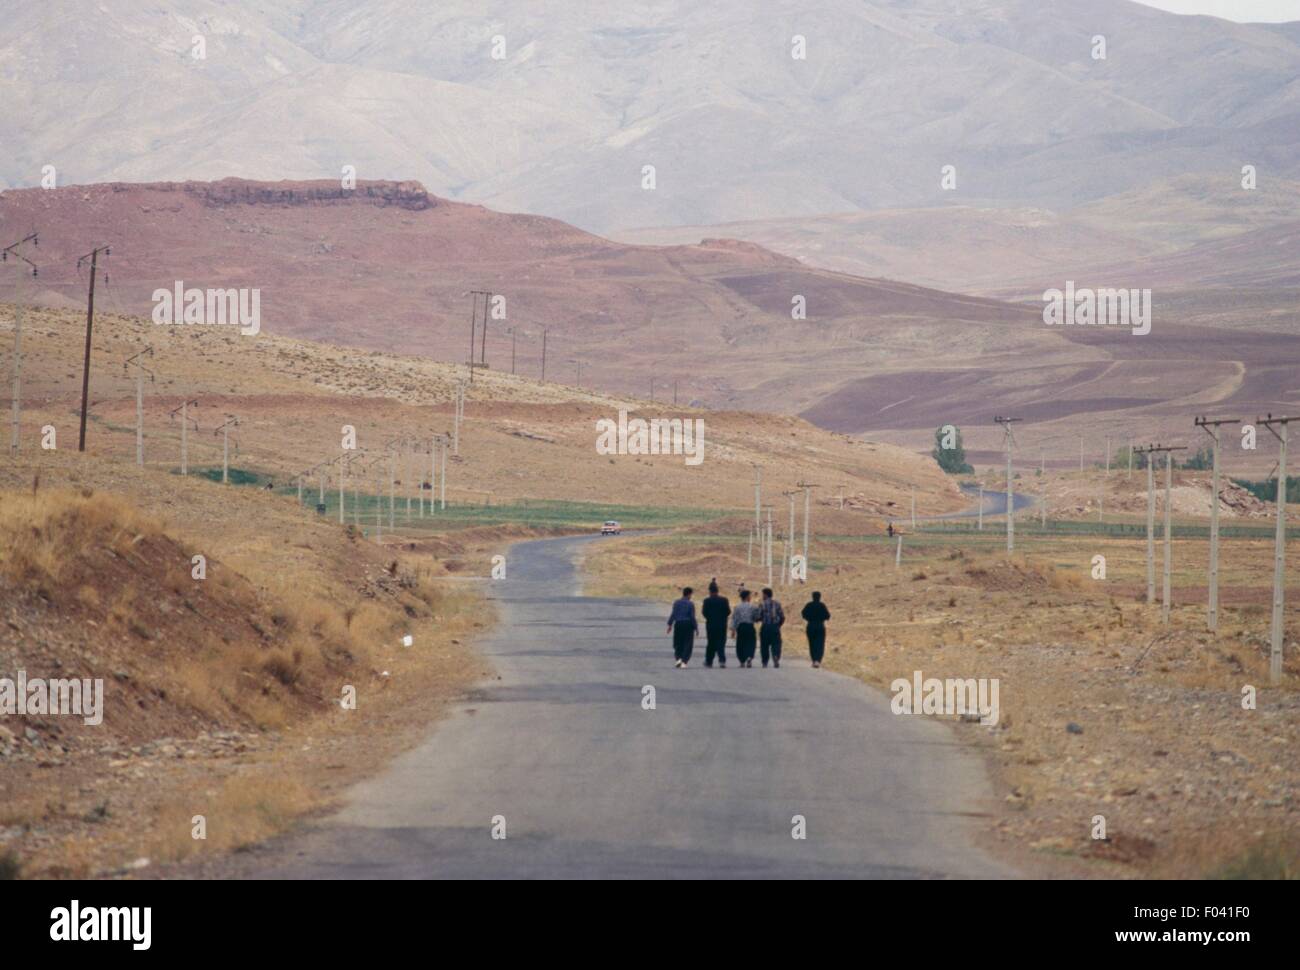 Men walking down a road in an arid landscape, Iranian Azerbaijan, Iran. Stock Photo